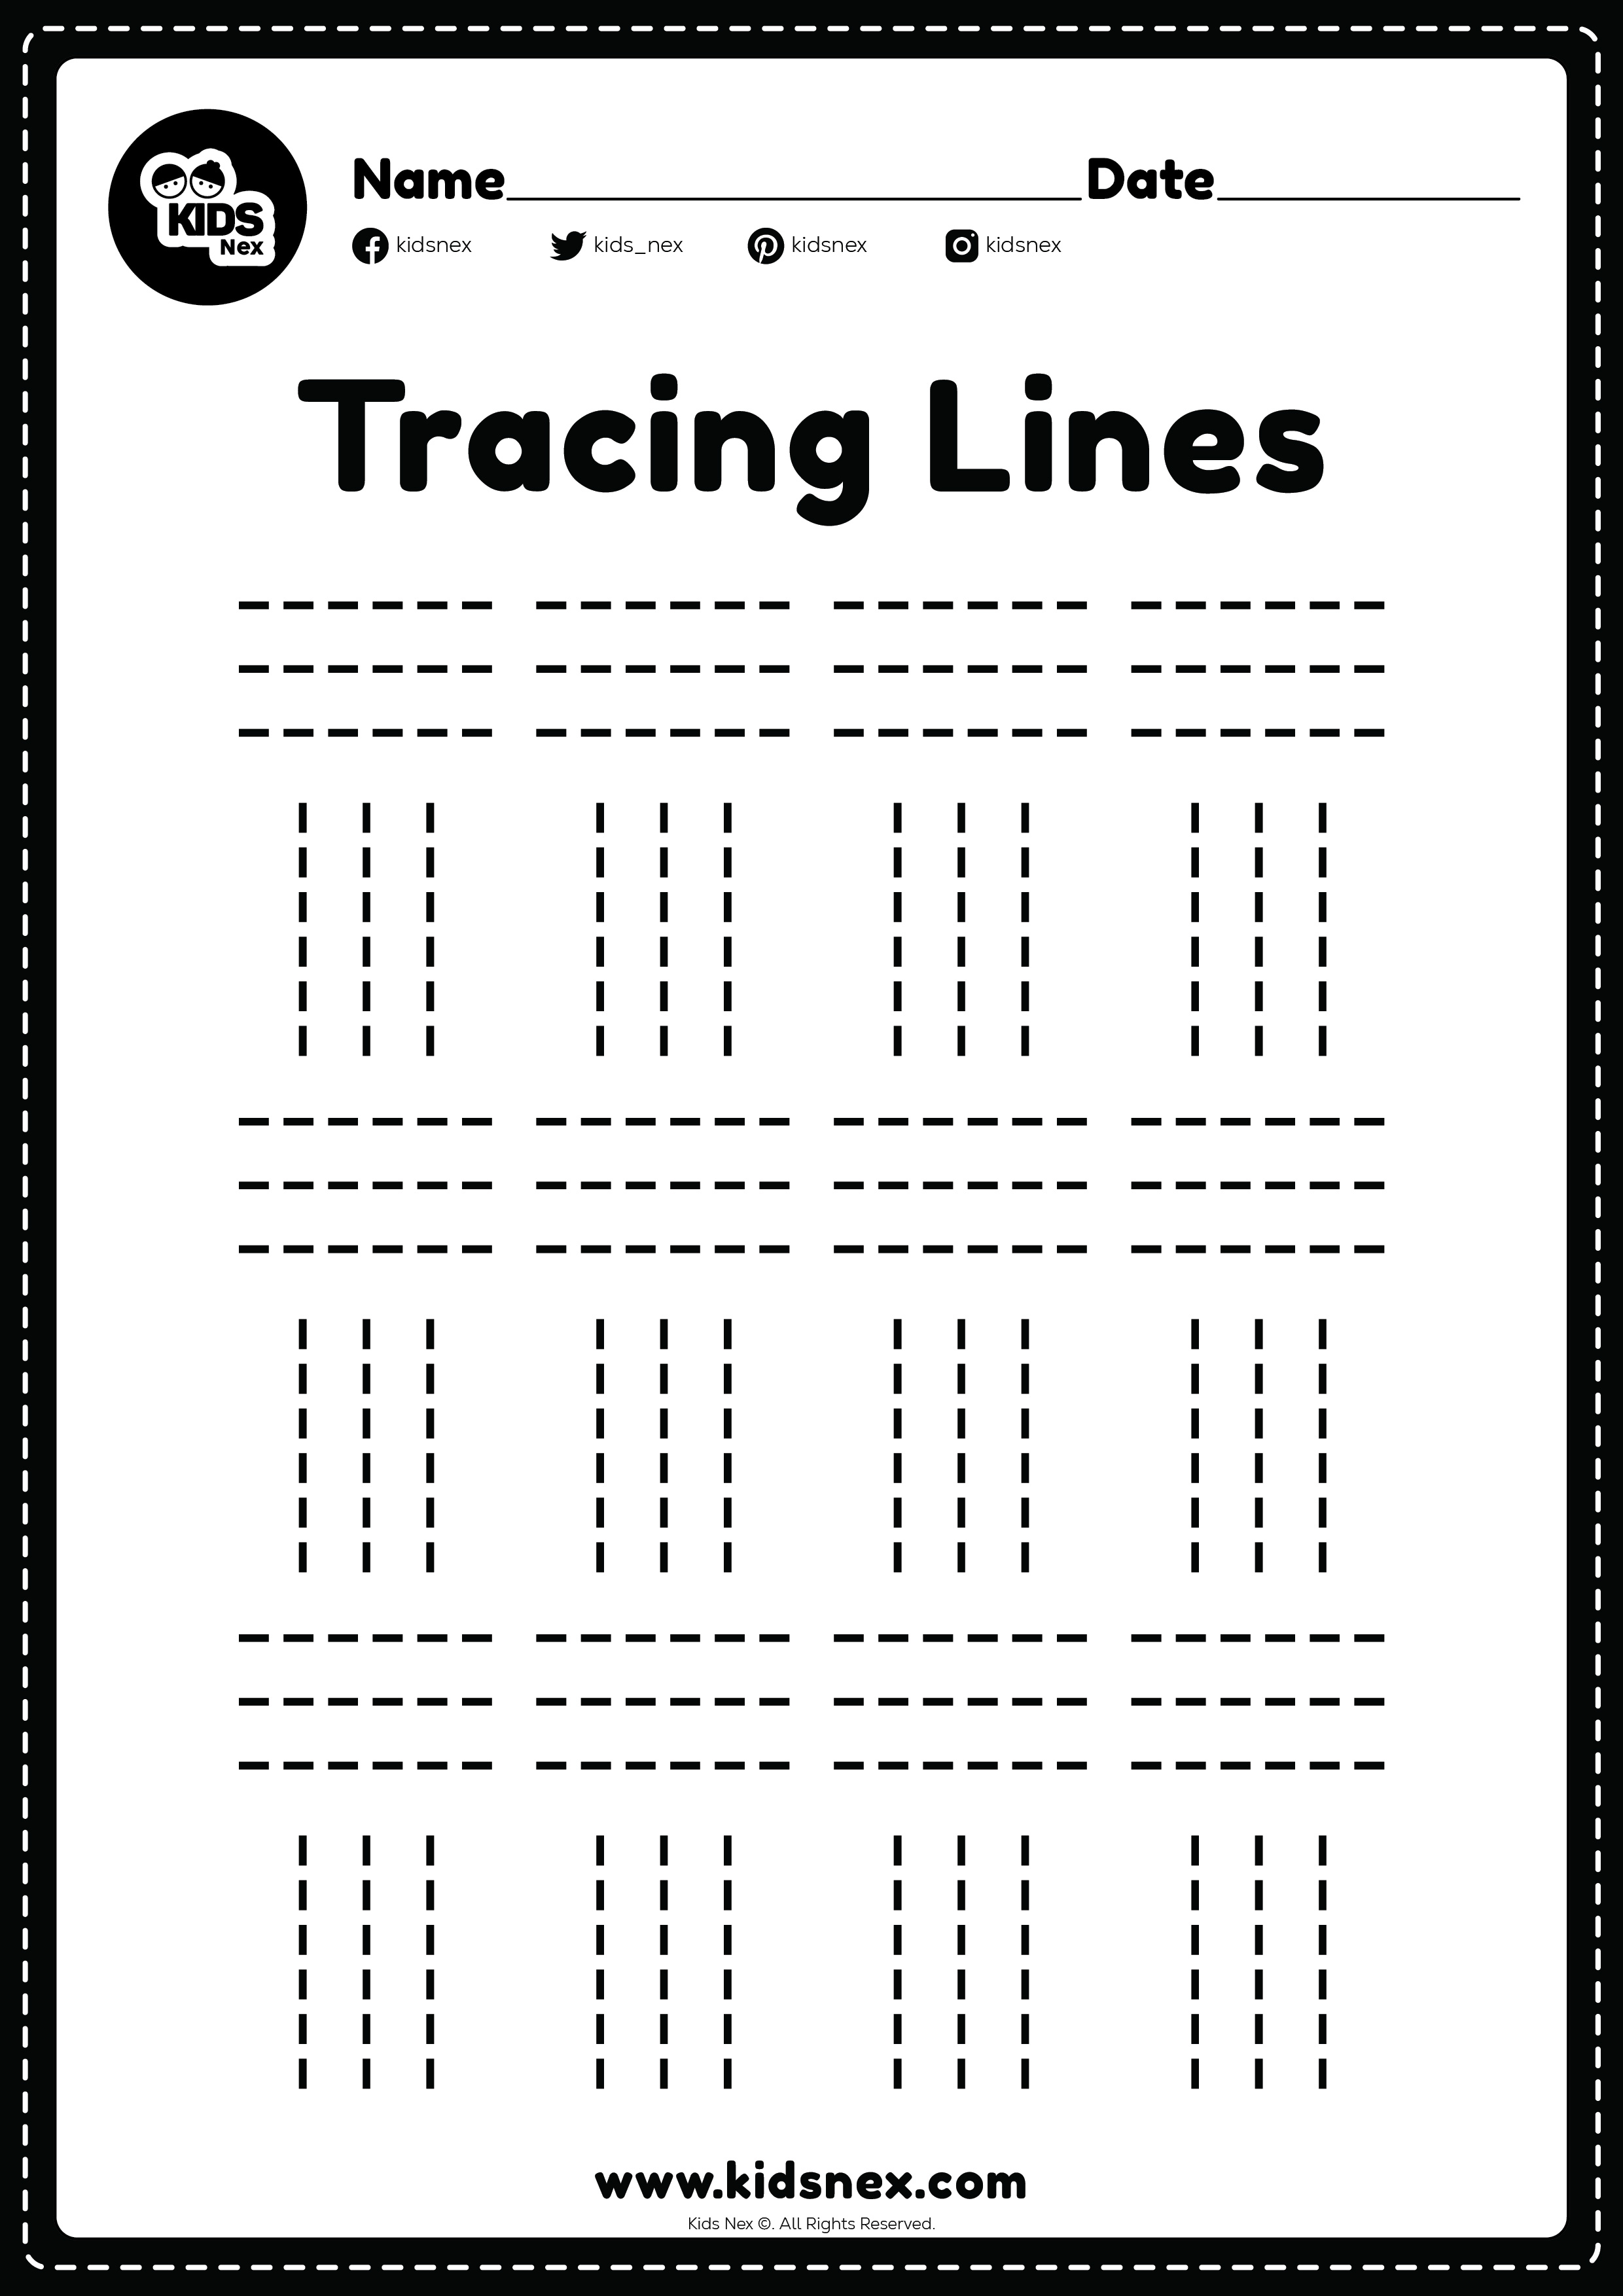 Tracing lines preschool worksheet for kindergarten kids for educational activities in a free printable page.